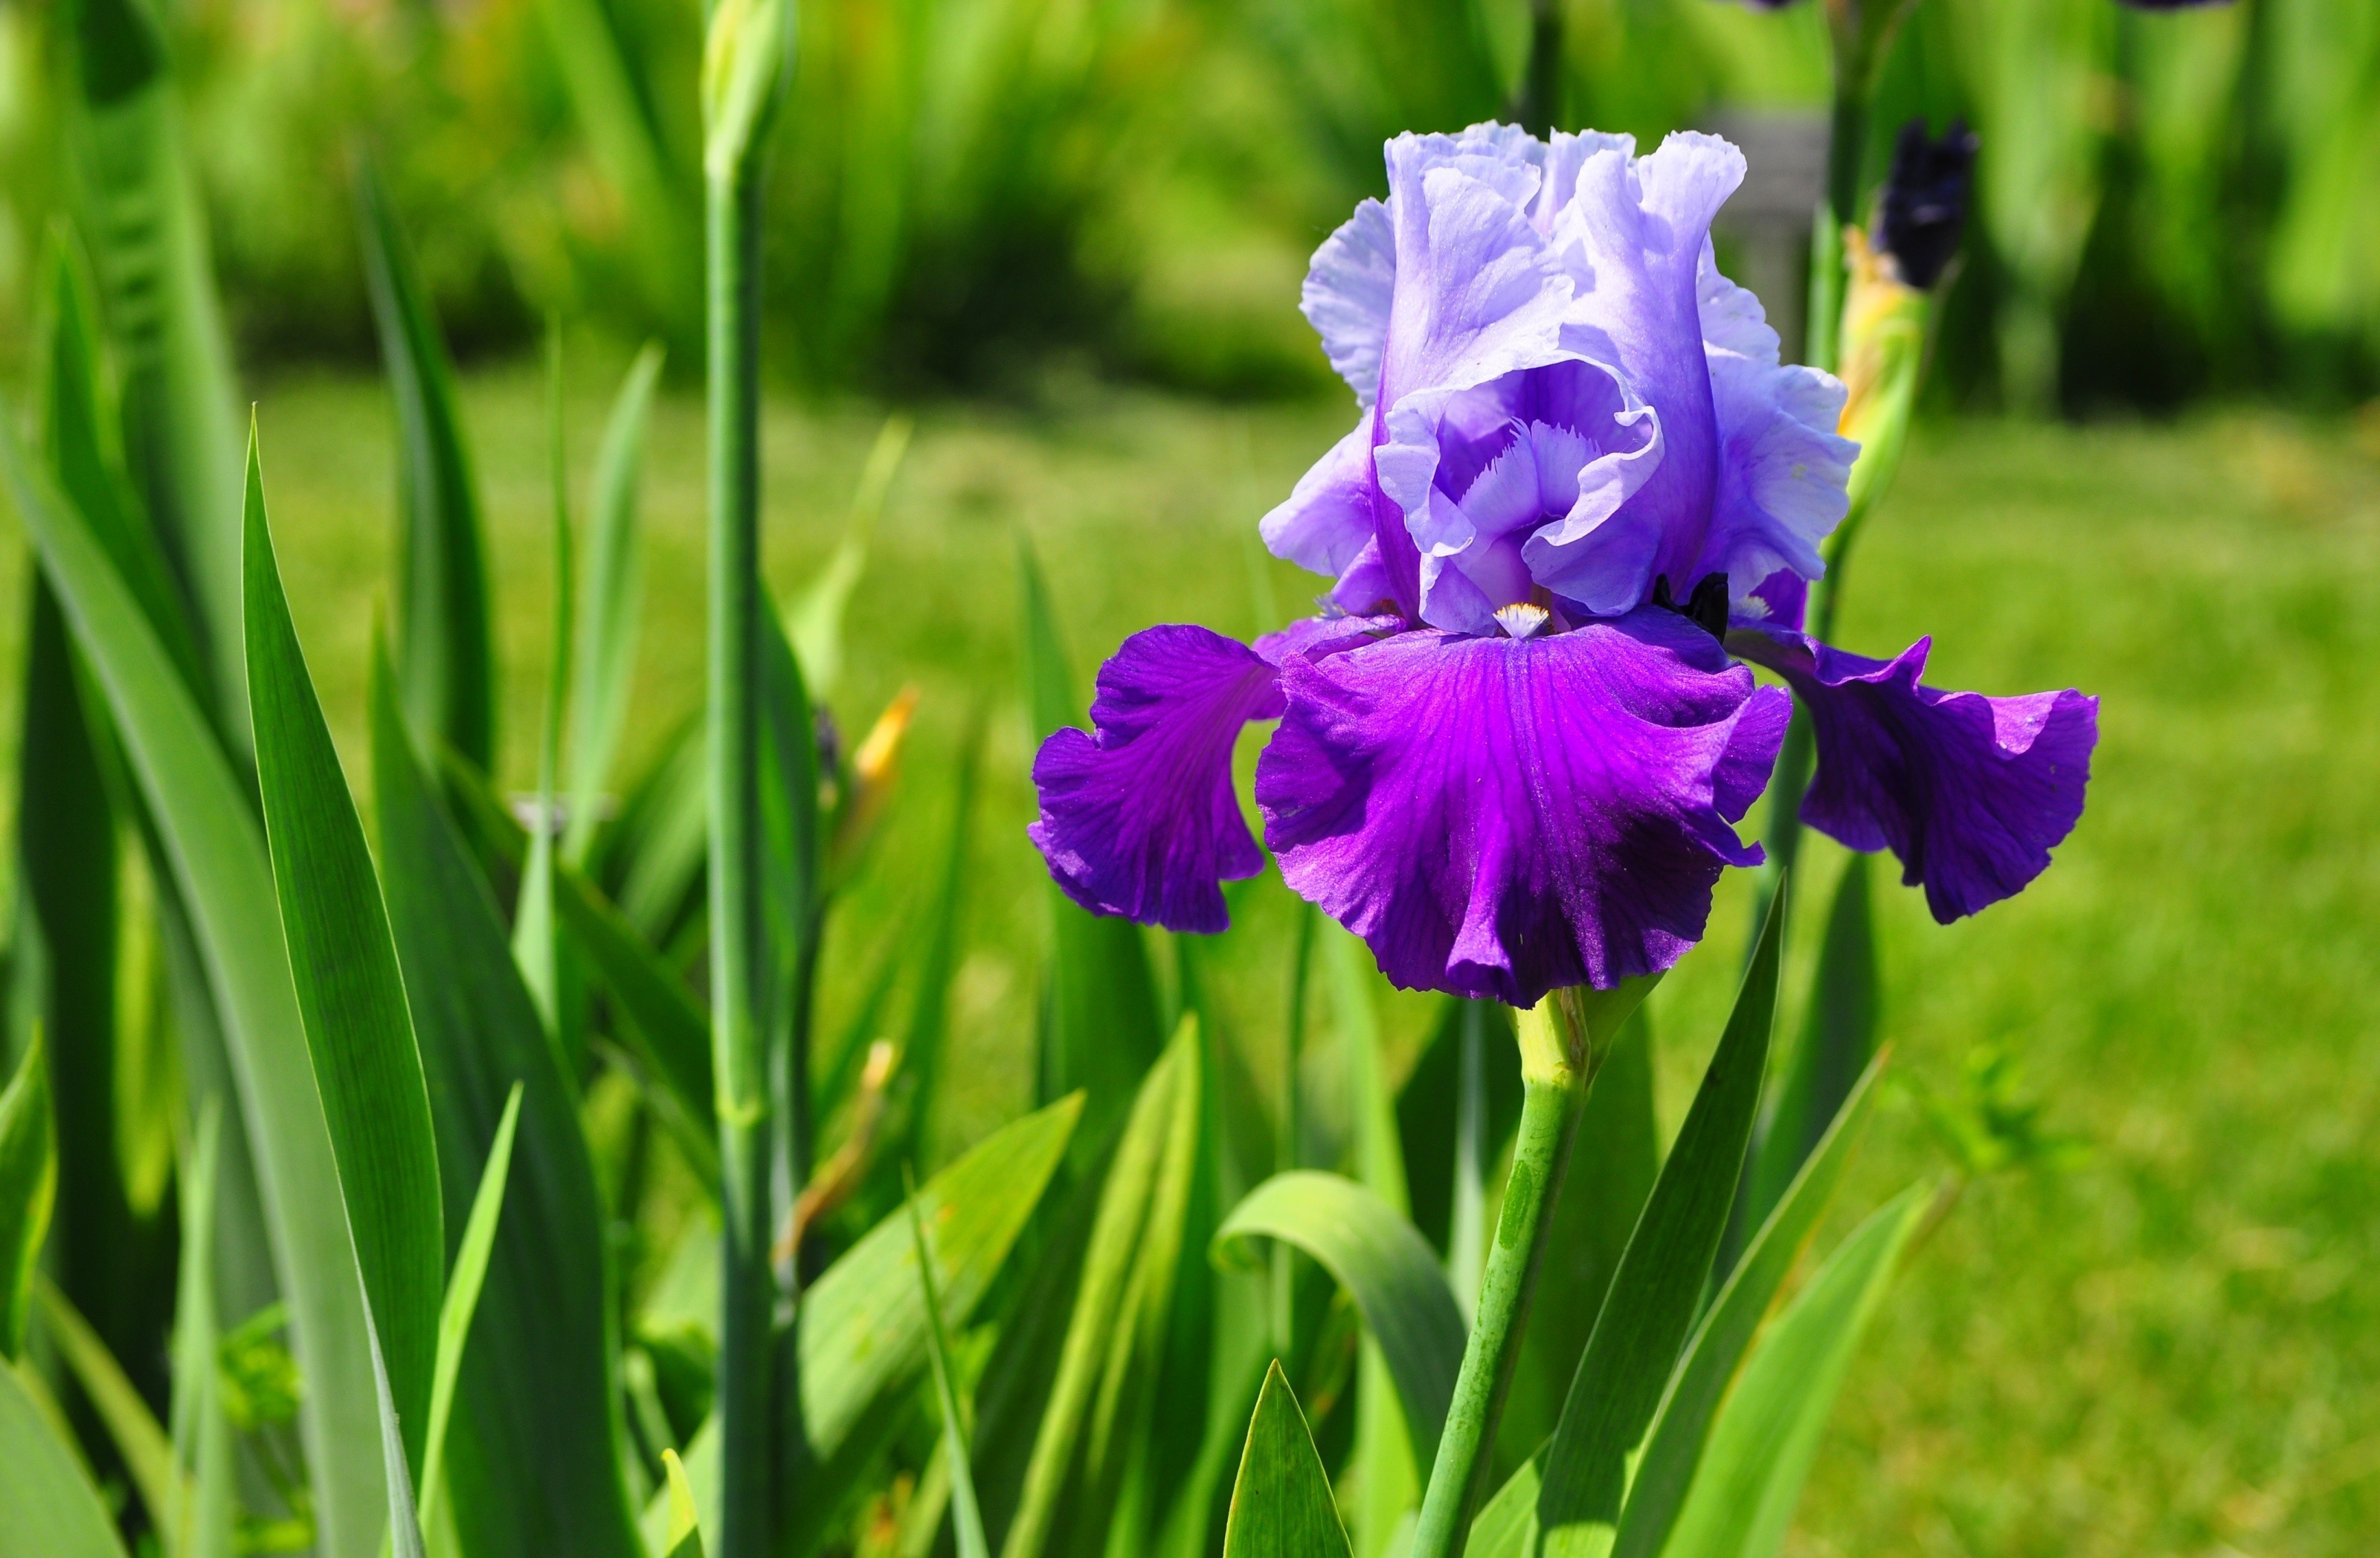 iris tapete,blume,blühende pflanze,blütenblatt,lila,pflanze